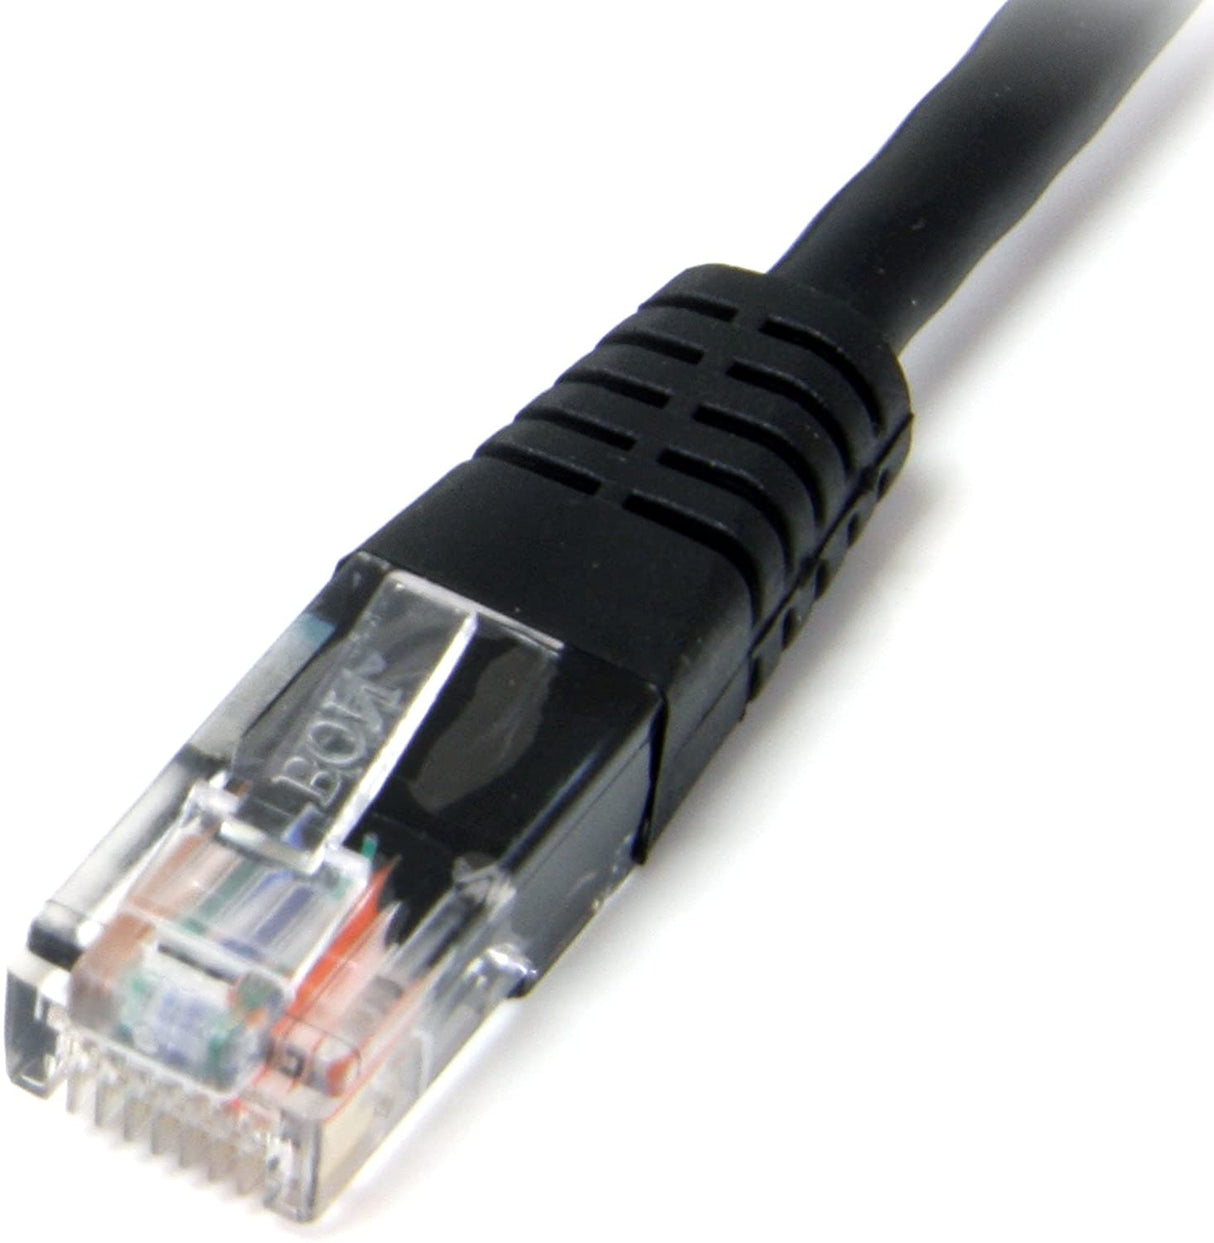 StarTech.com Cat5e Ethernet Cable - 1 ft - Black - Patch Cable - Molded Cat5e Cable - Short Network Cable - Ethernet Cord - Cat 5e Cable - 1ft (M45PATCH1BK) 1 ft / 30cm Black